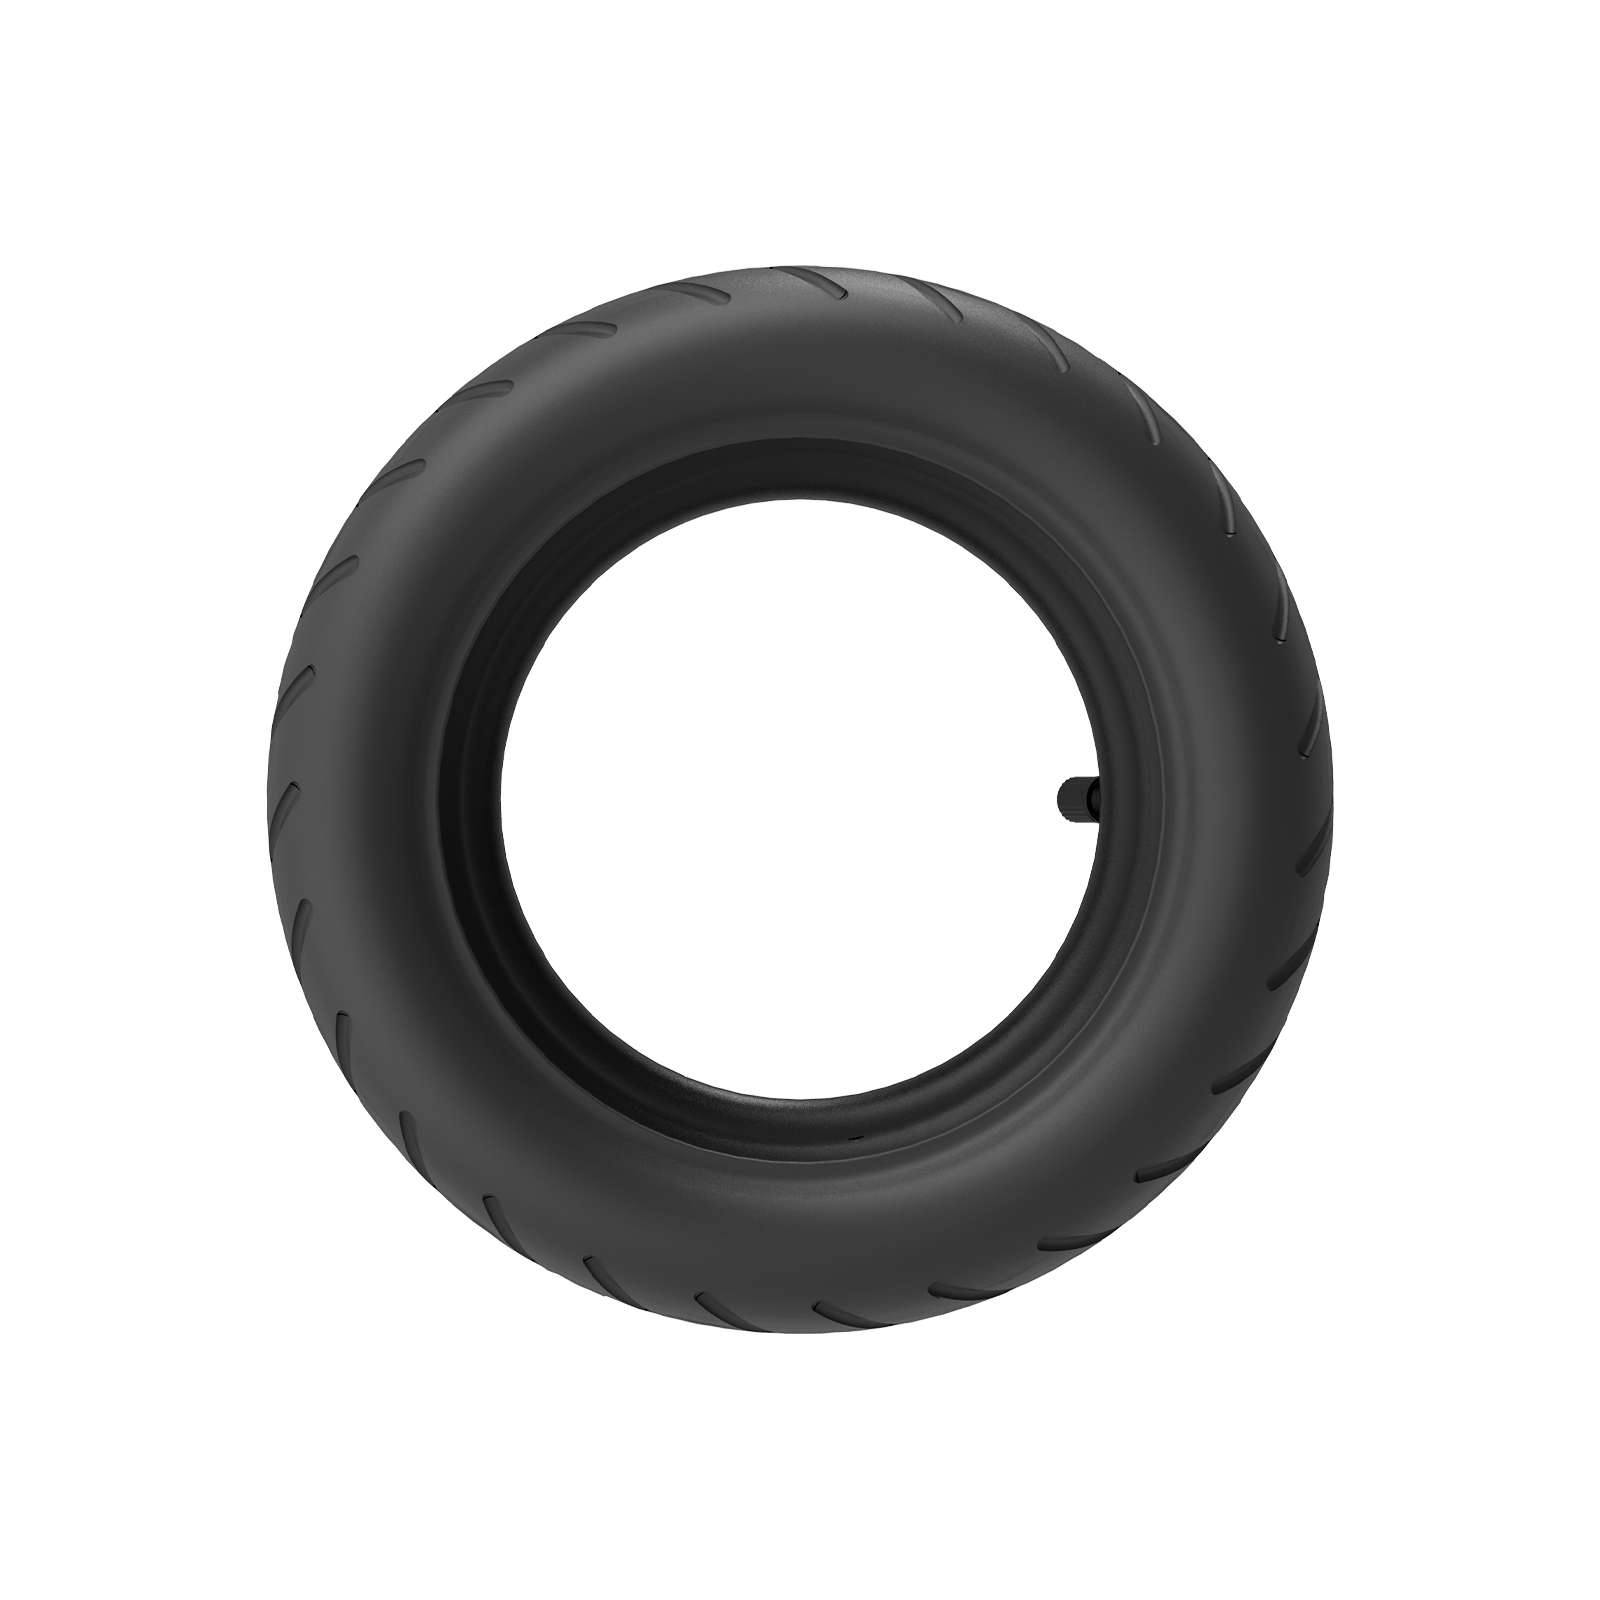 Xiaomi Electric Scooter Pneumatic Tire (8.5")